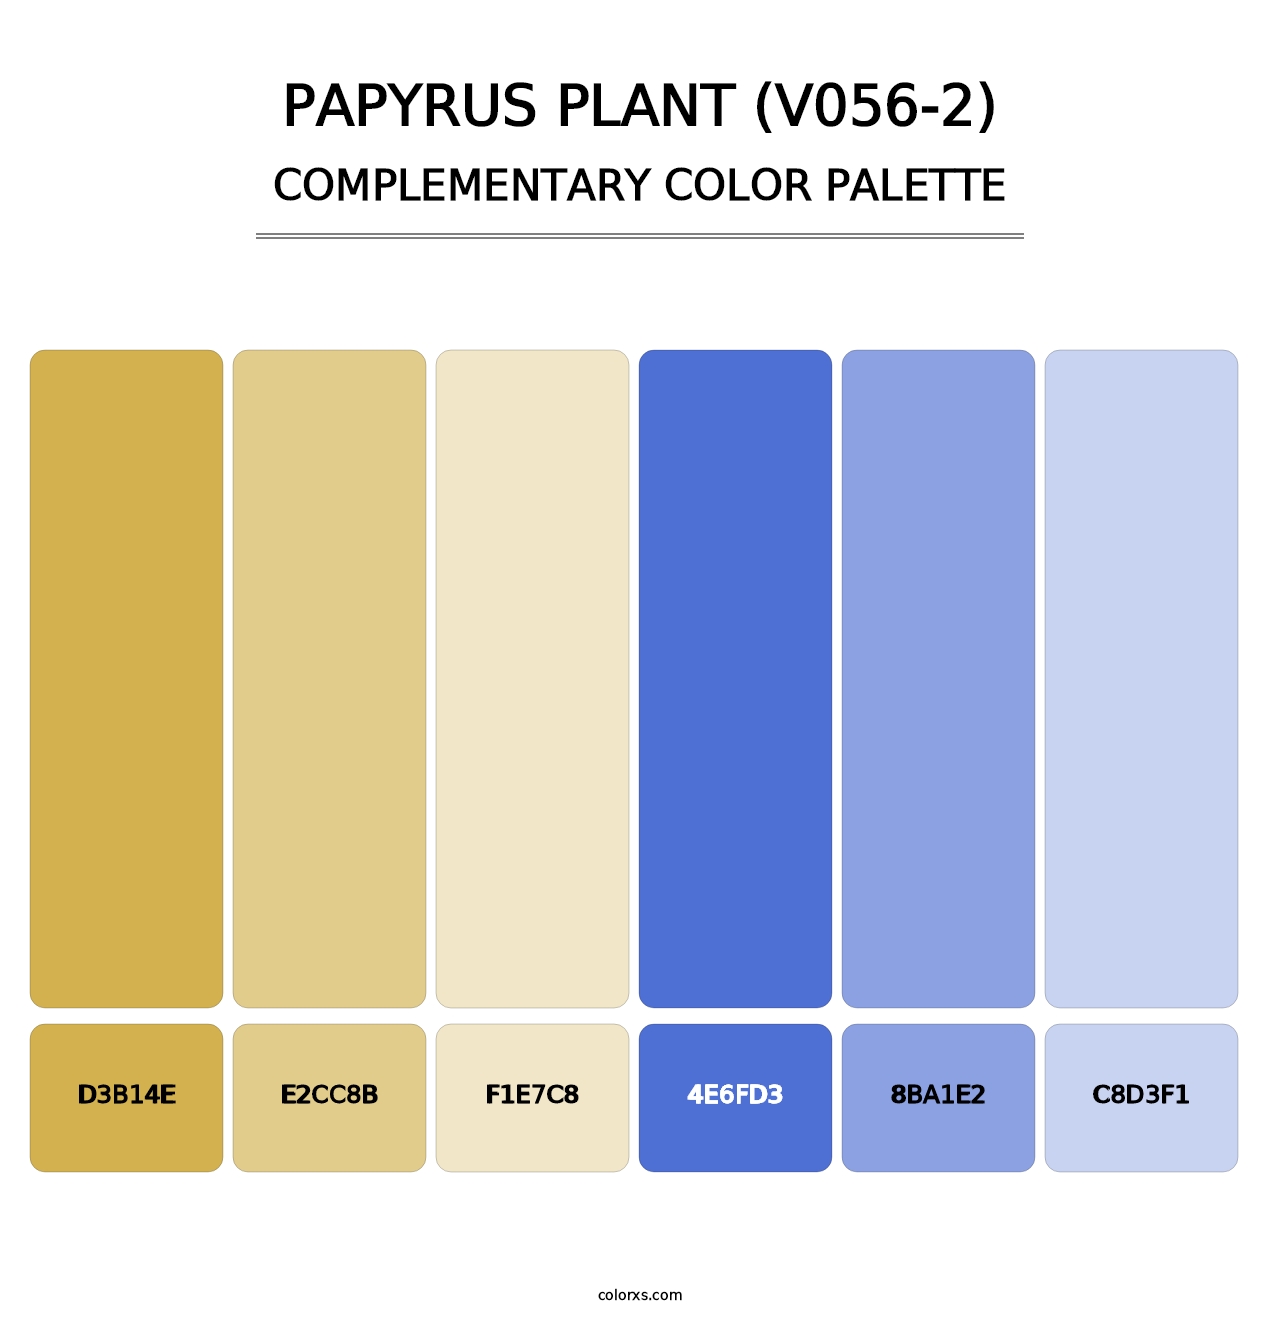 Papyrus Plant (V056-2) - Complementary Color Palette